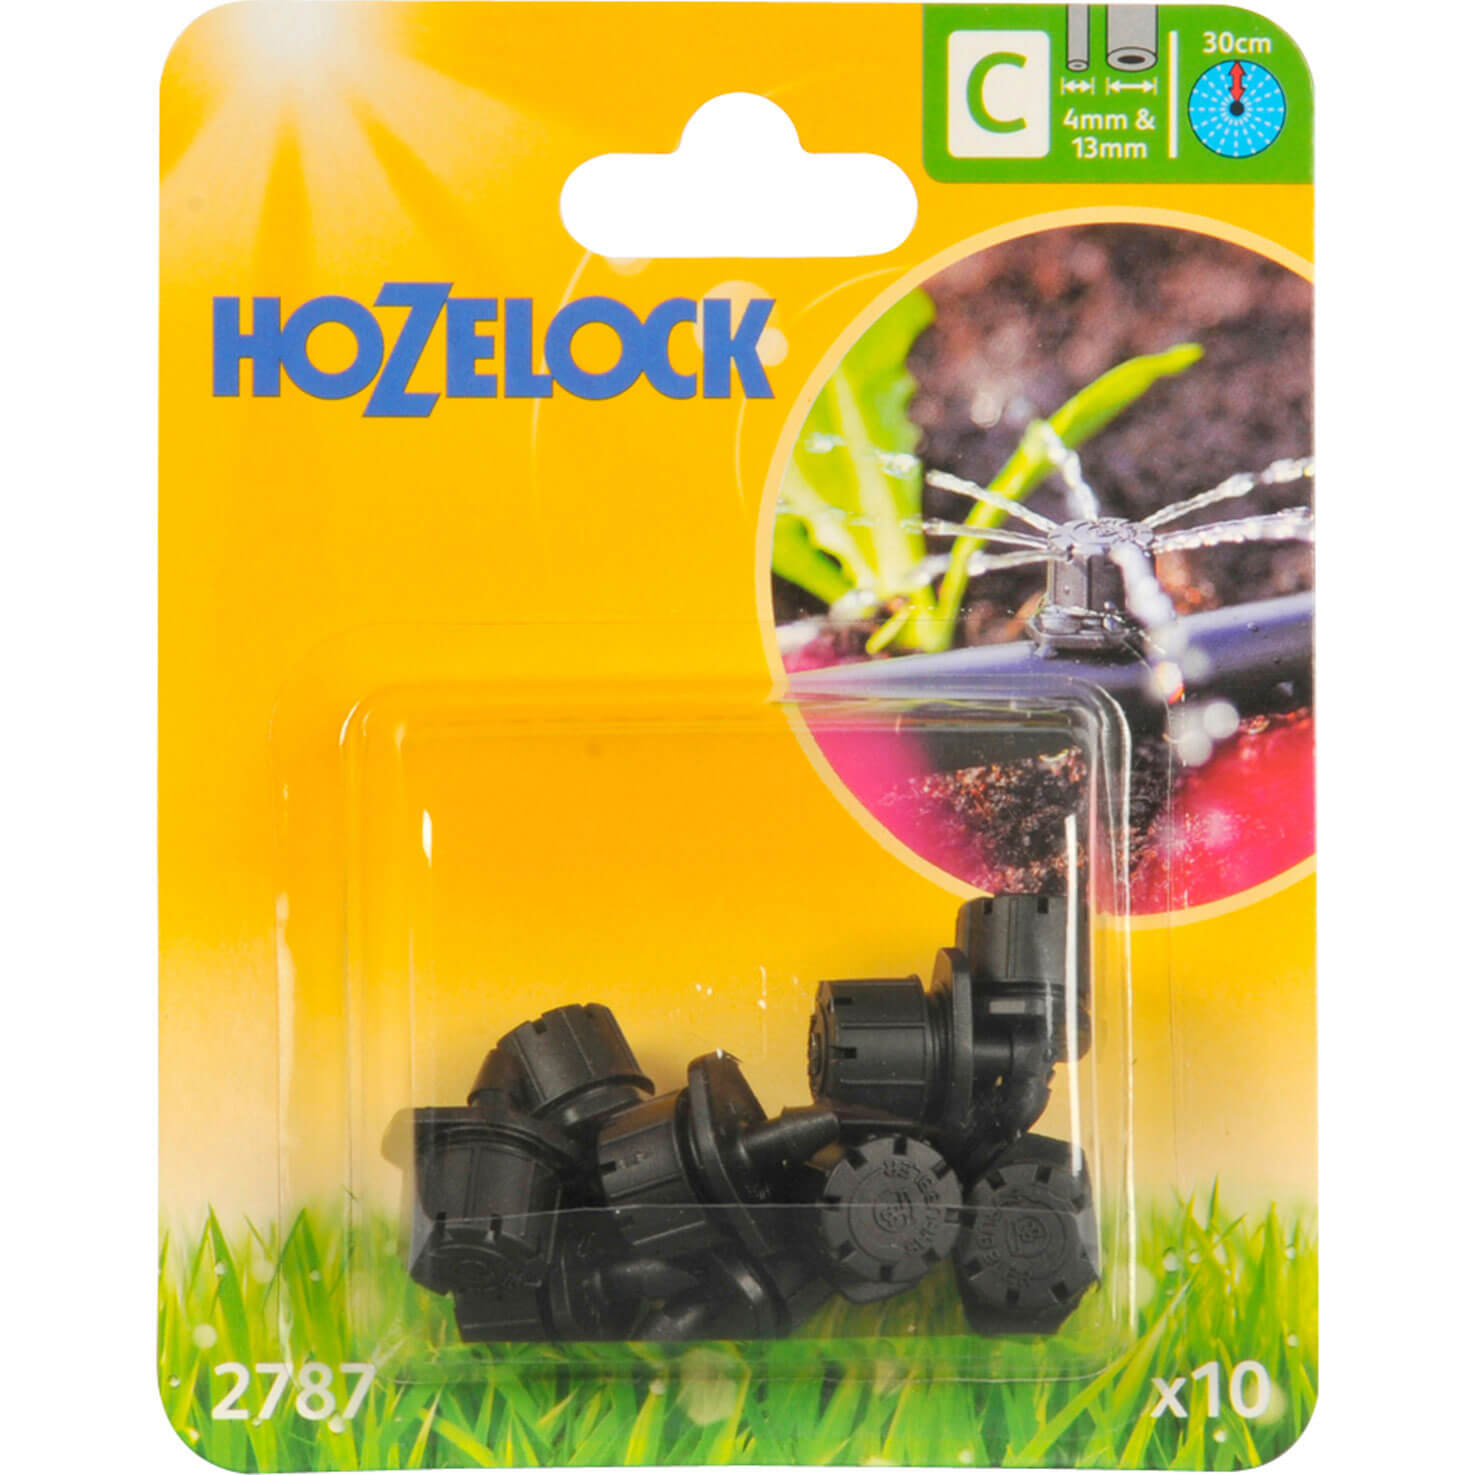 Hozelock End of Line Adjustable Mini Garden Water Sprinkler Contains 10